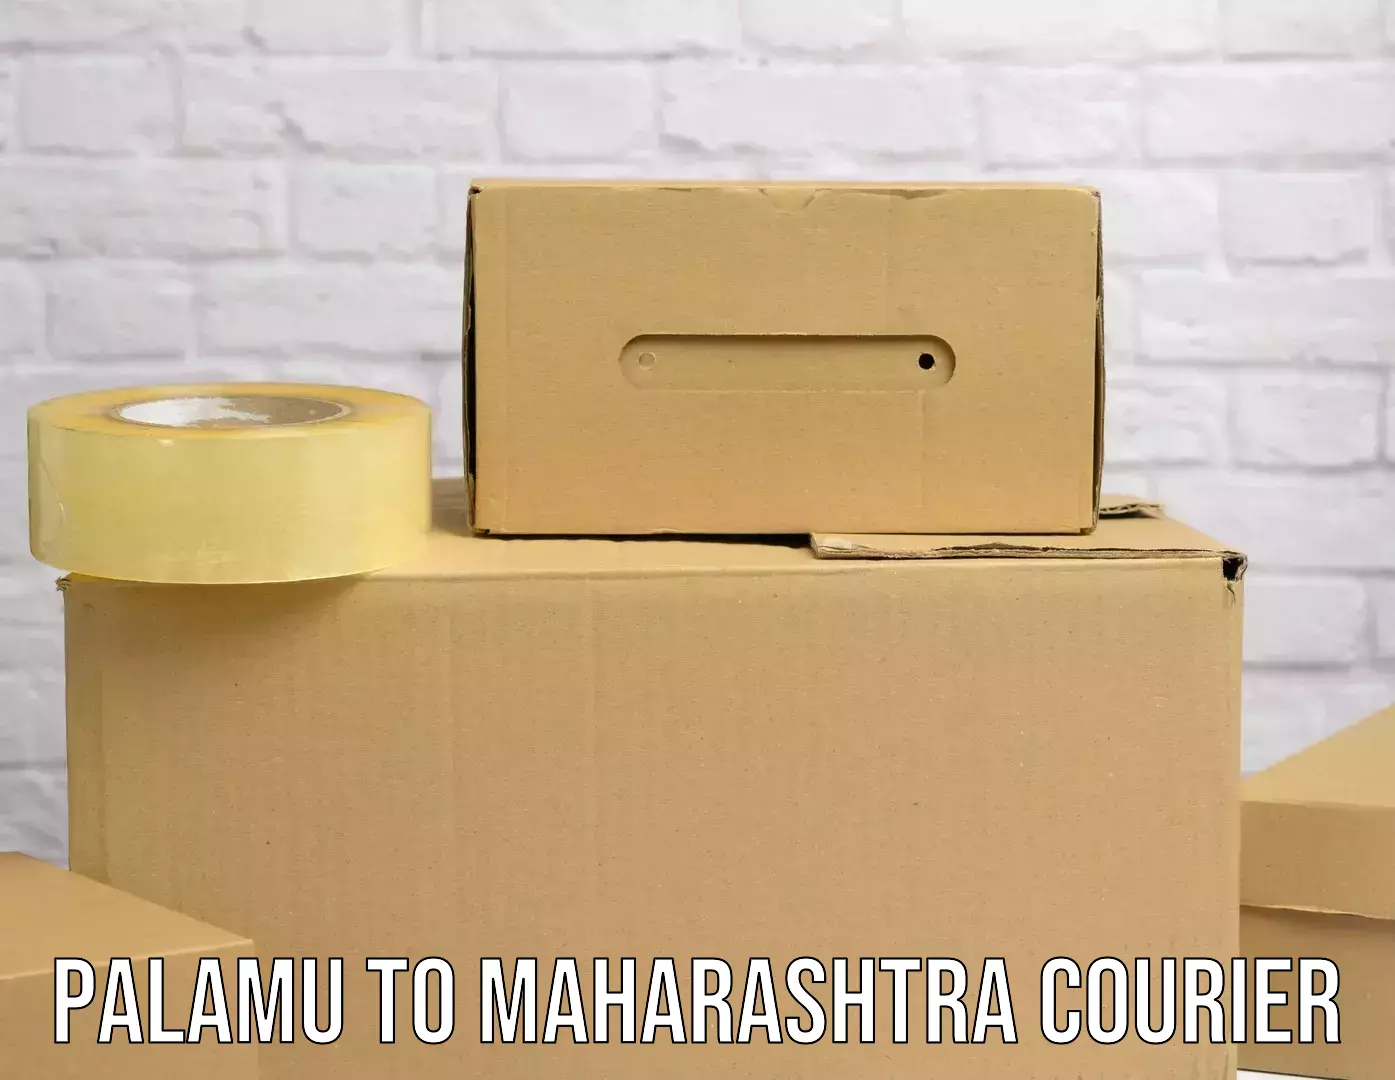 Digital courier platforms Palamu to Maharashtra